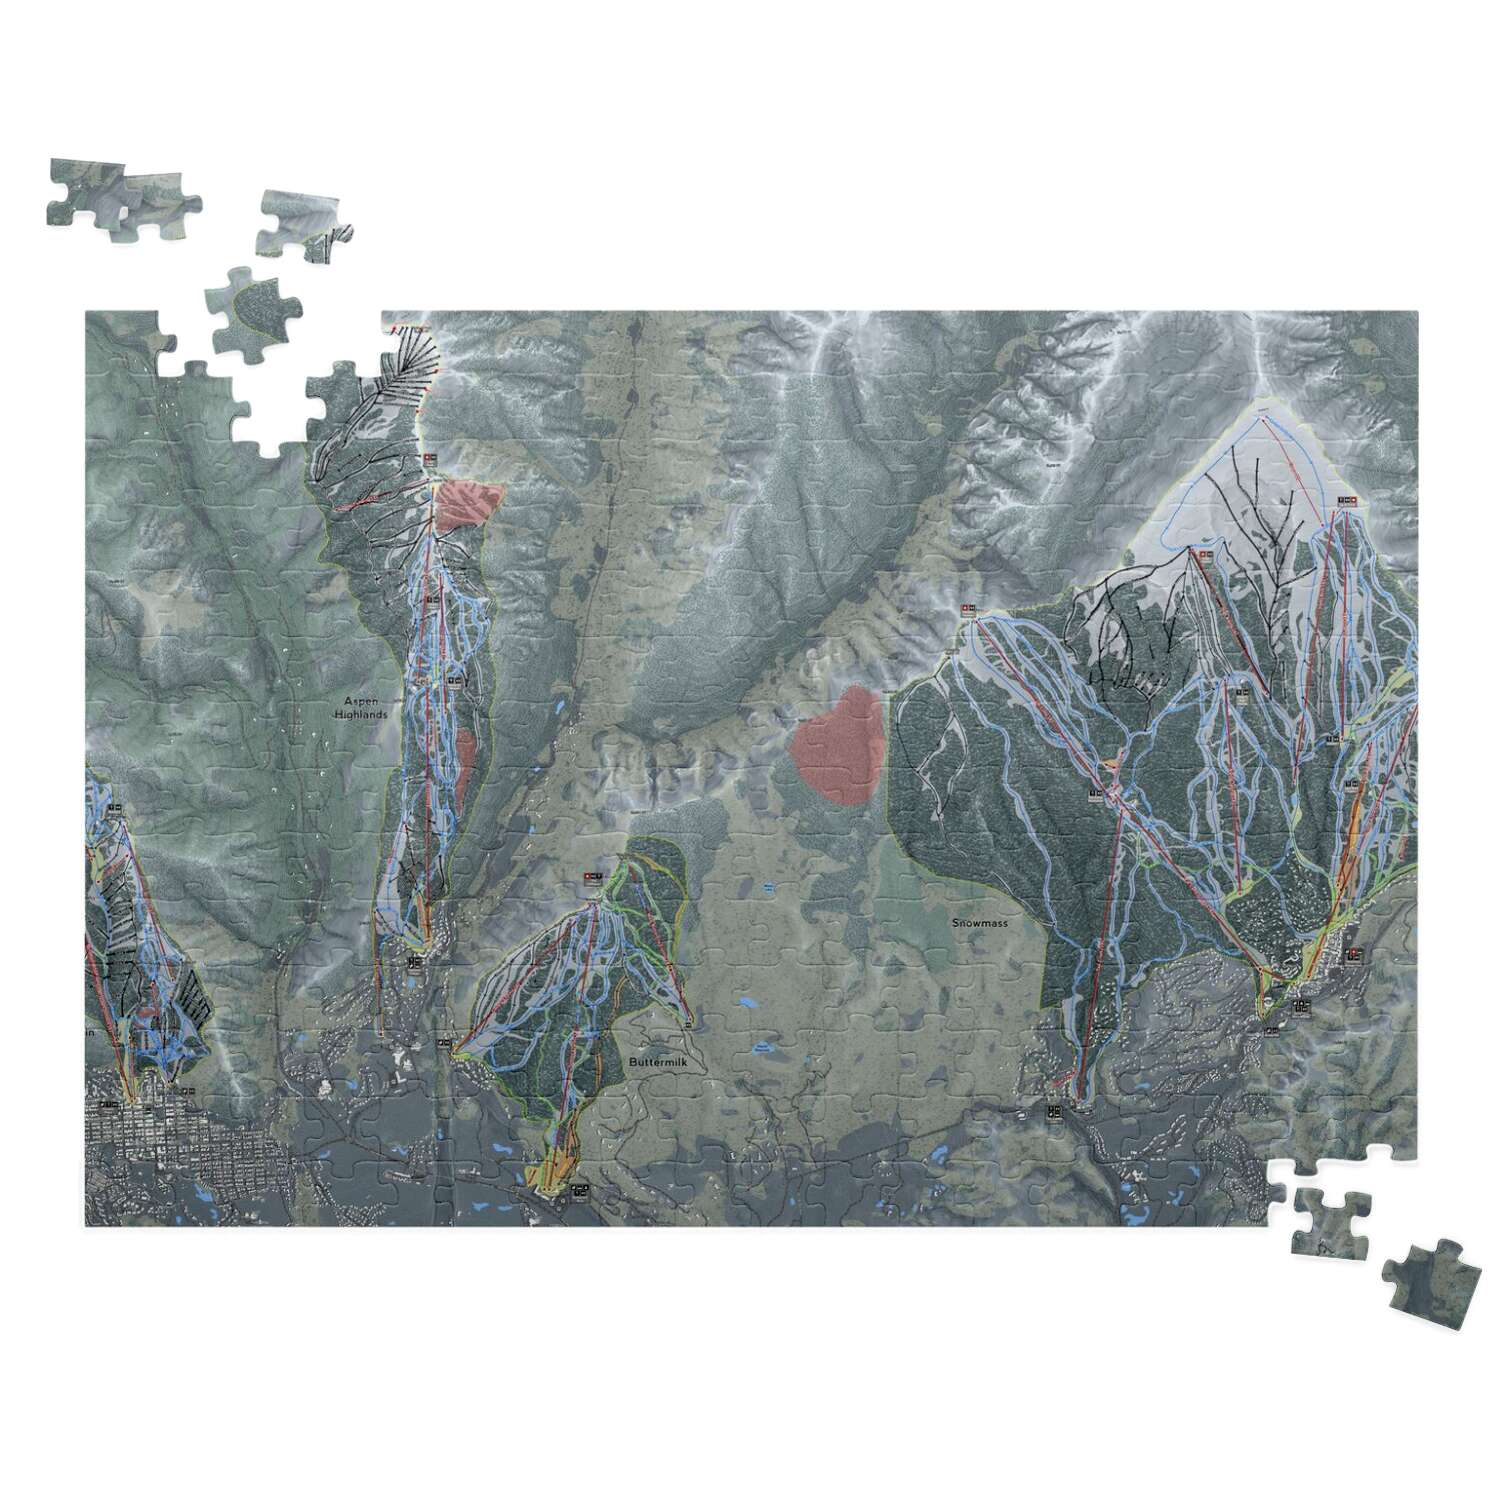 Aspen Snowmass, Colorado Ski Trail Map Puzzles - Powderaddicts